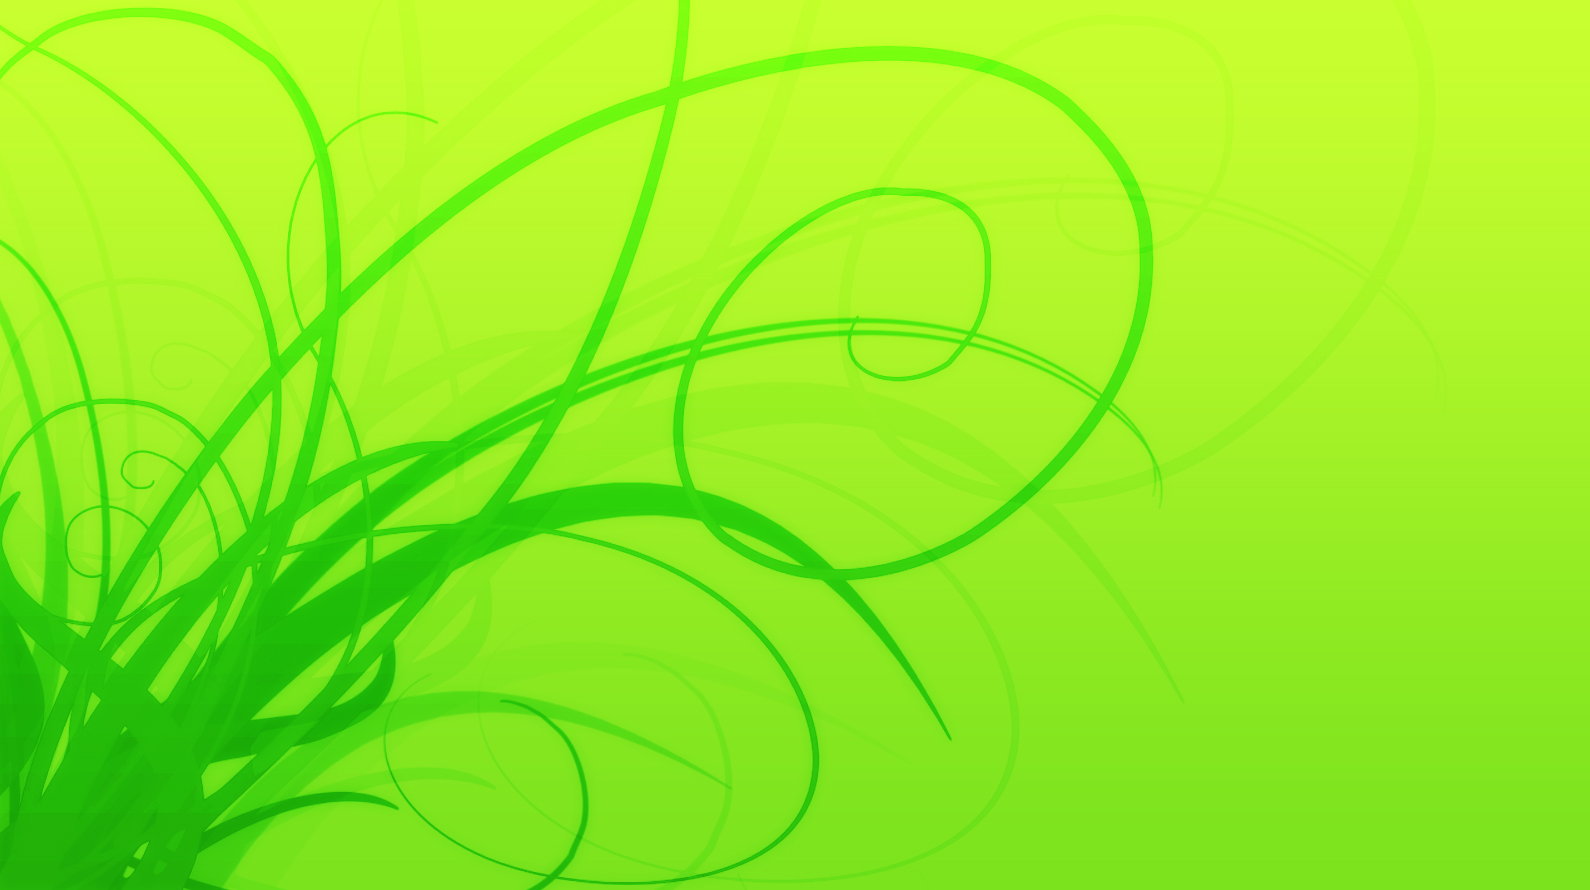 Free Bright Neon Green Foliage Swirls Wallpaper from BackgroundsEtc